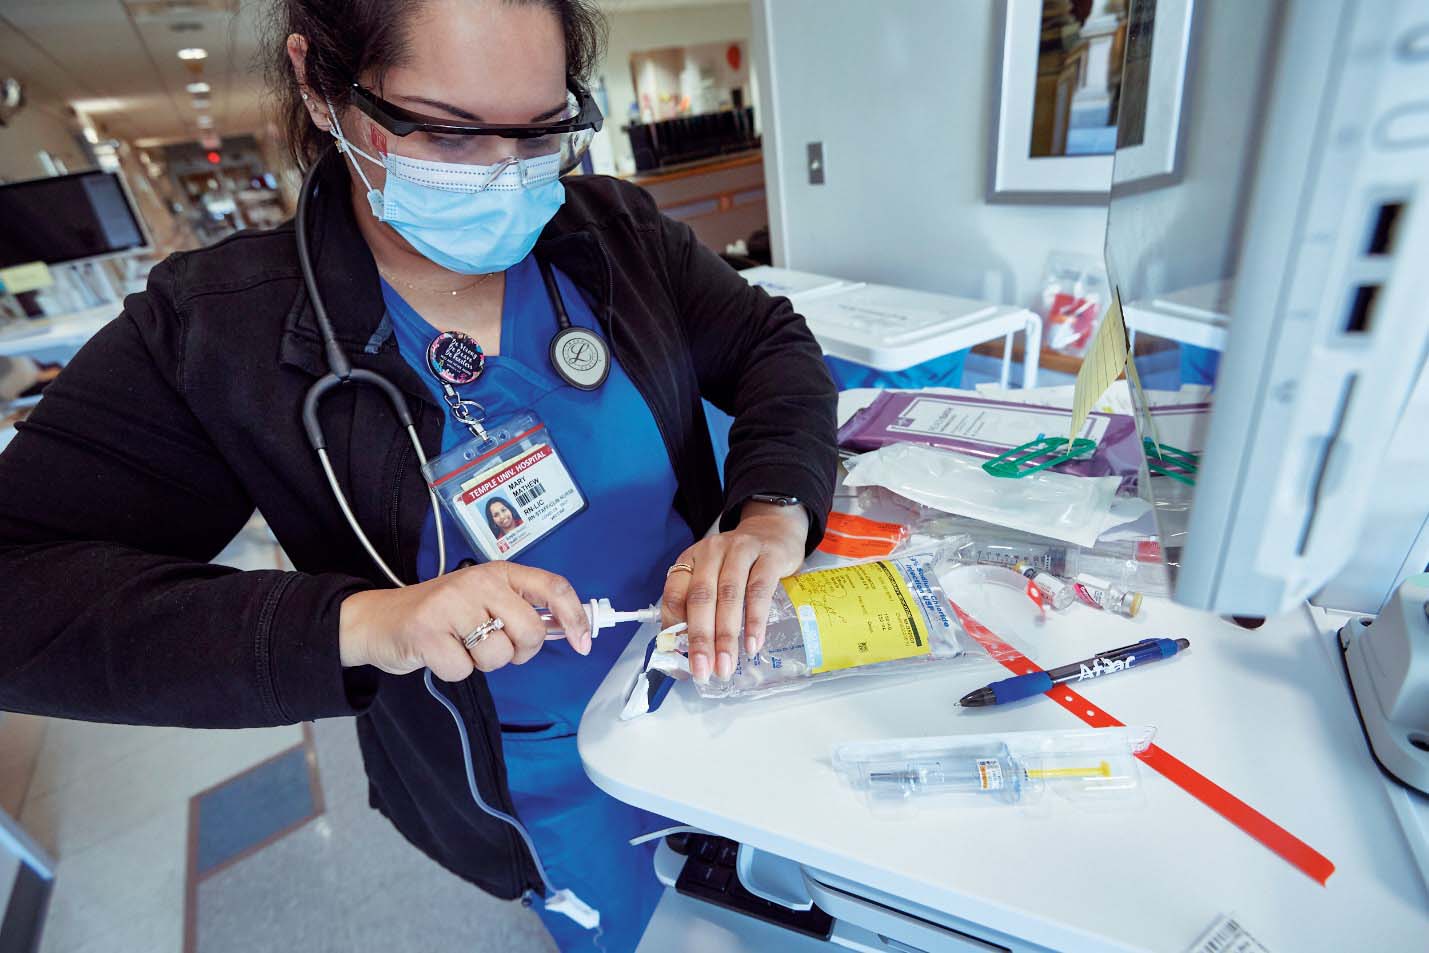 A bone marrow transplant nurse gathers supplies to begin a patient's treatment.